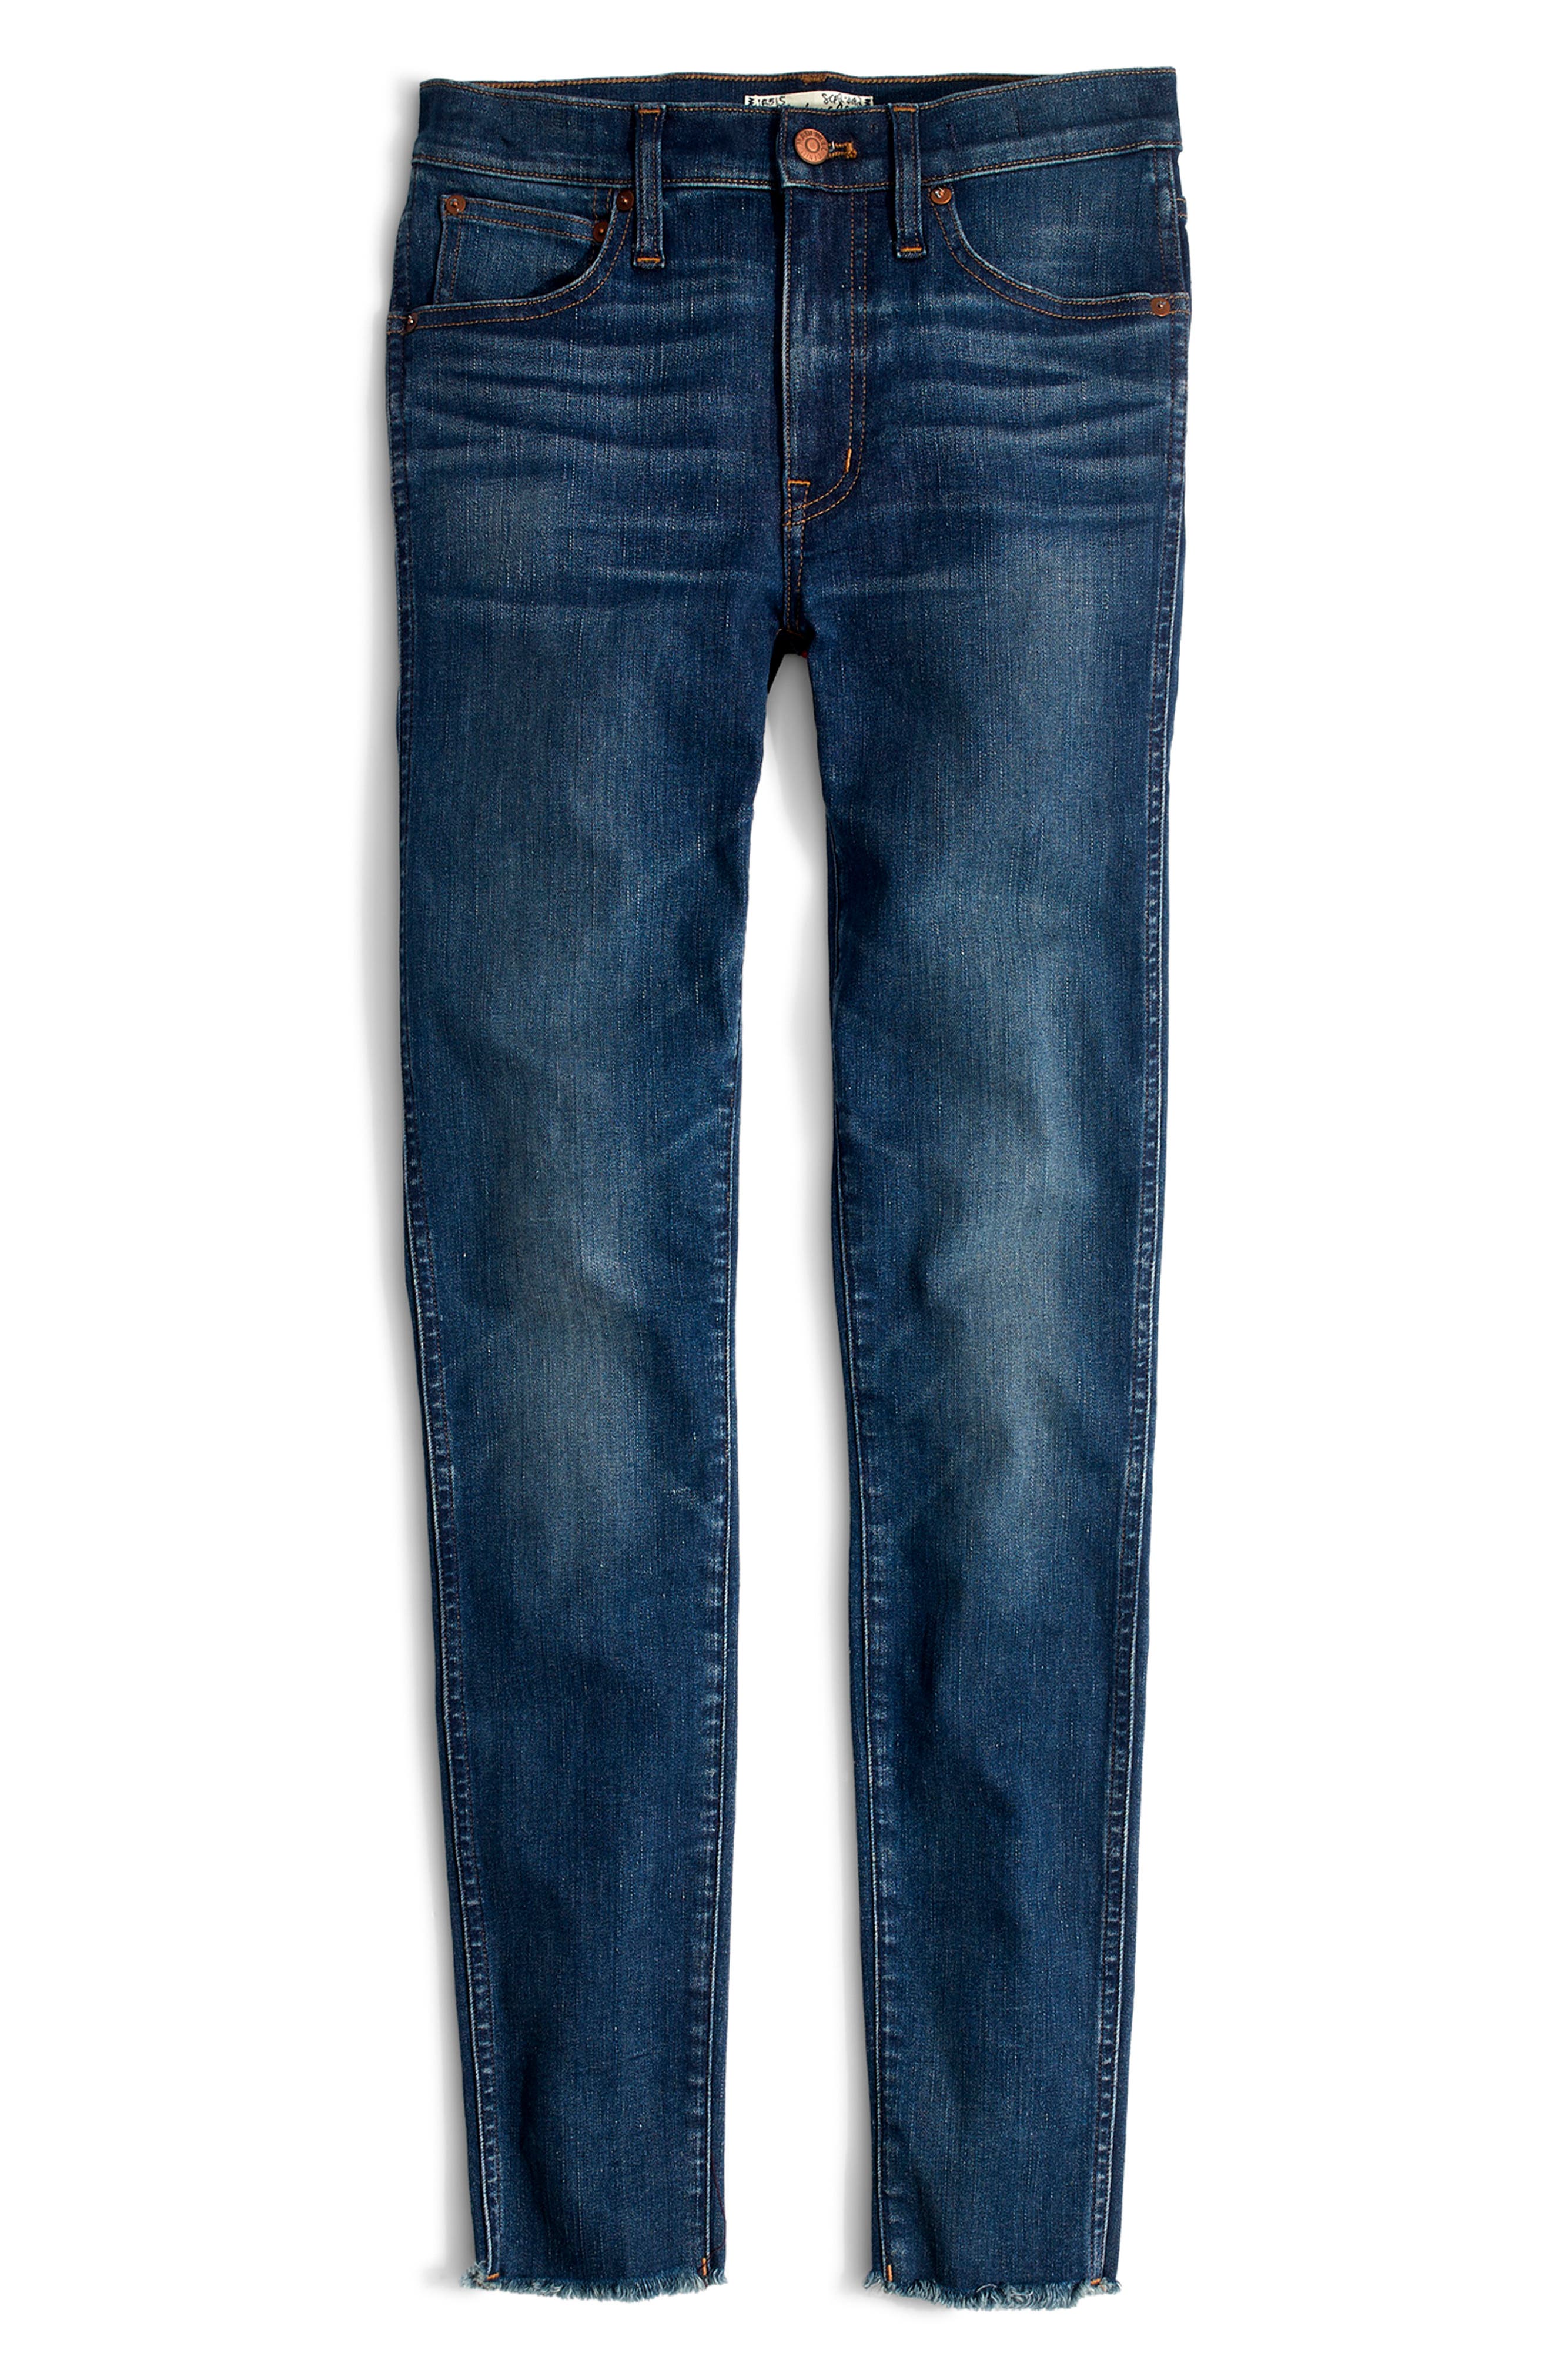 madewell paloma jeans